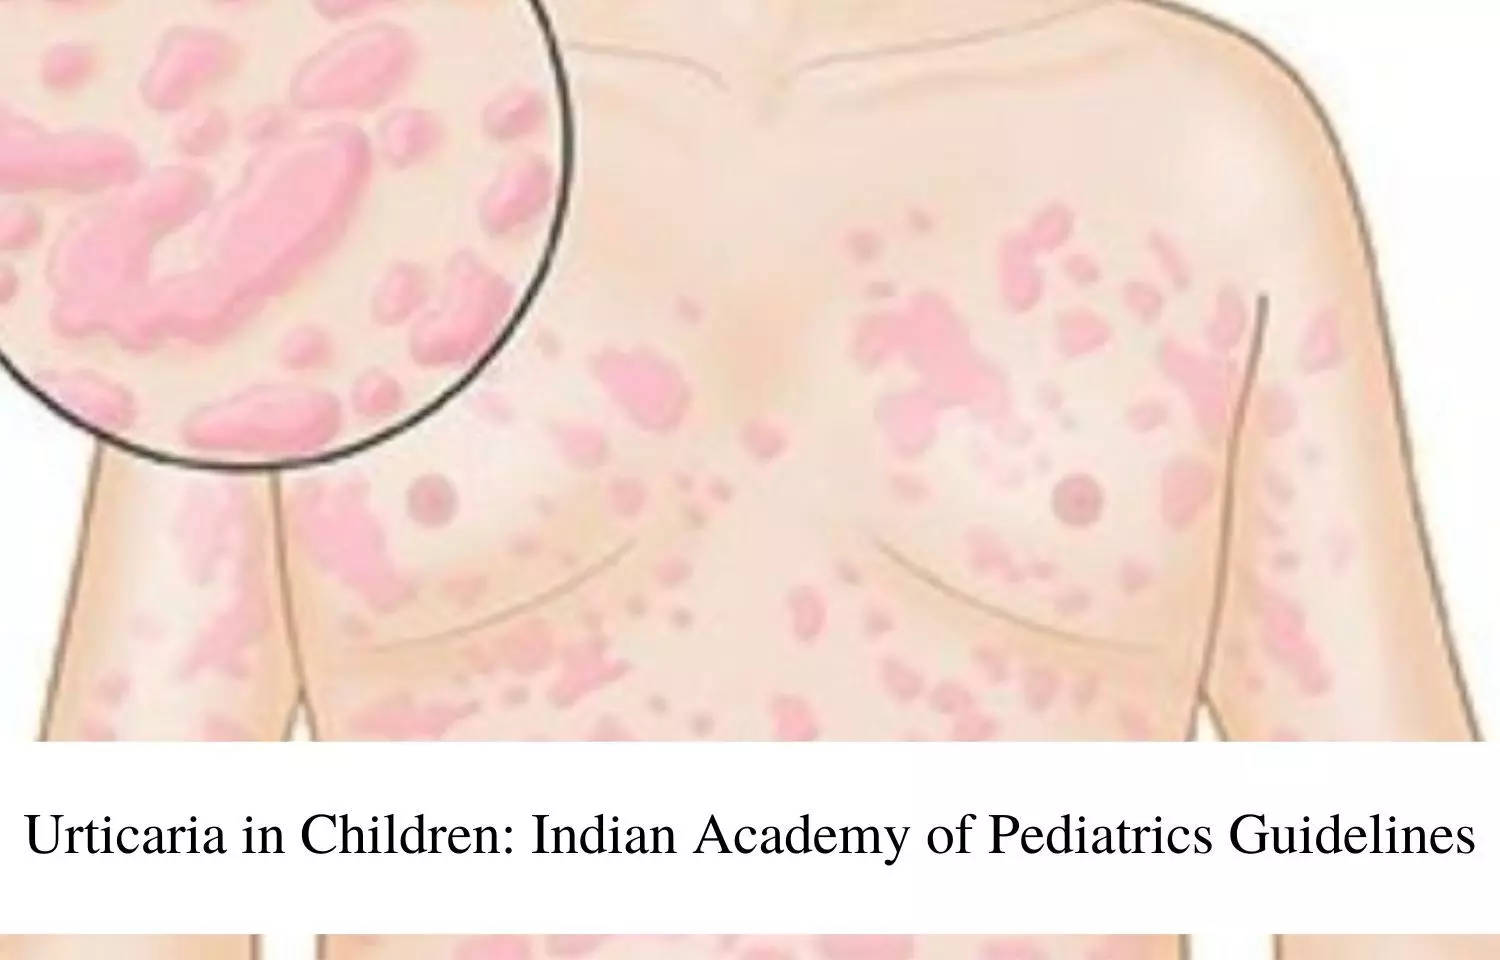 Urticaria in Children: Indian Academy of Pediatrics Guidelines